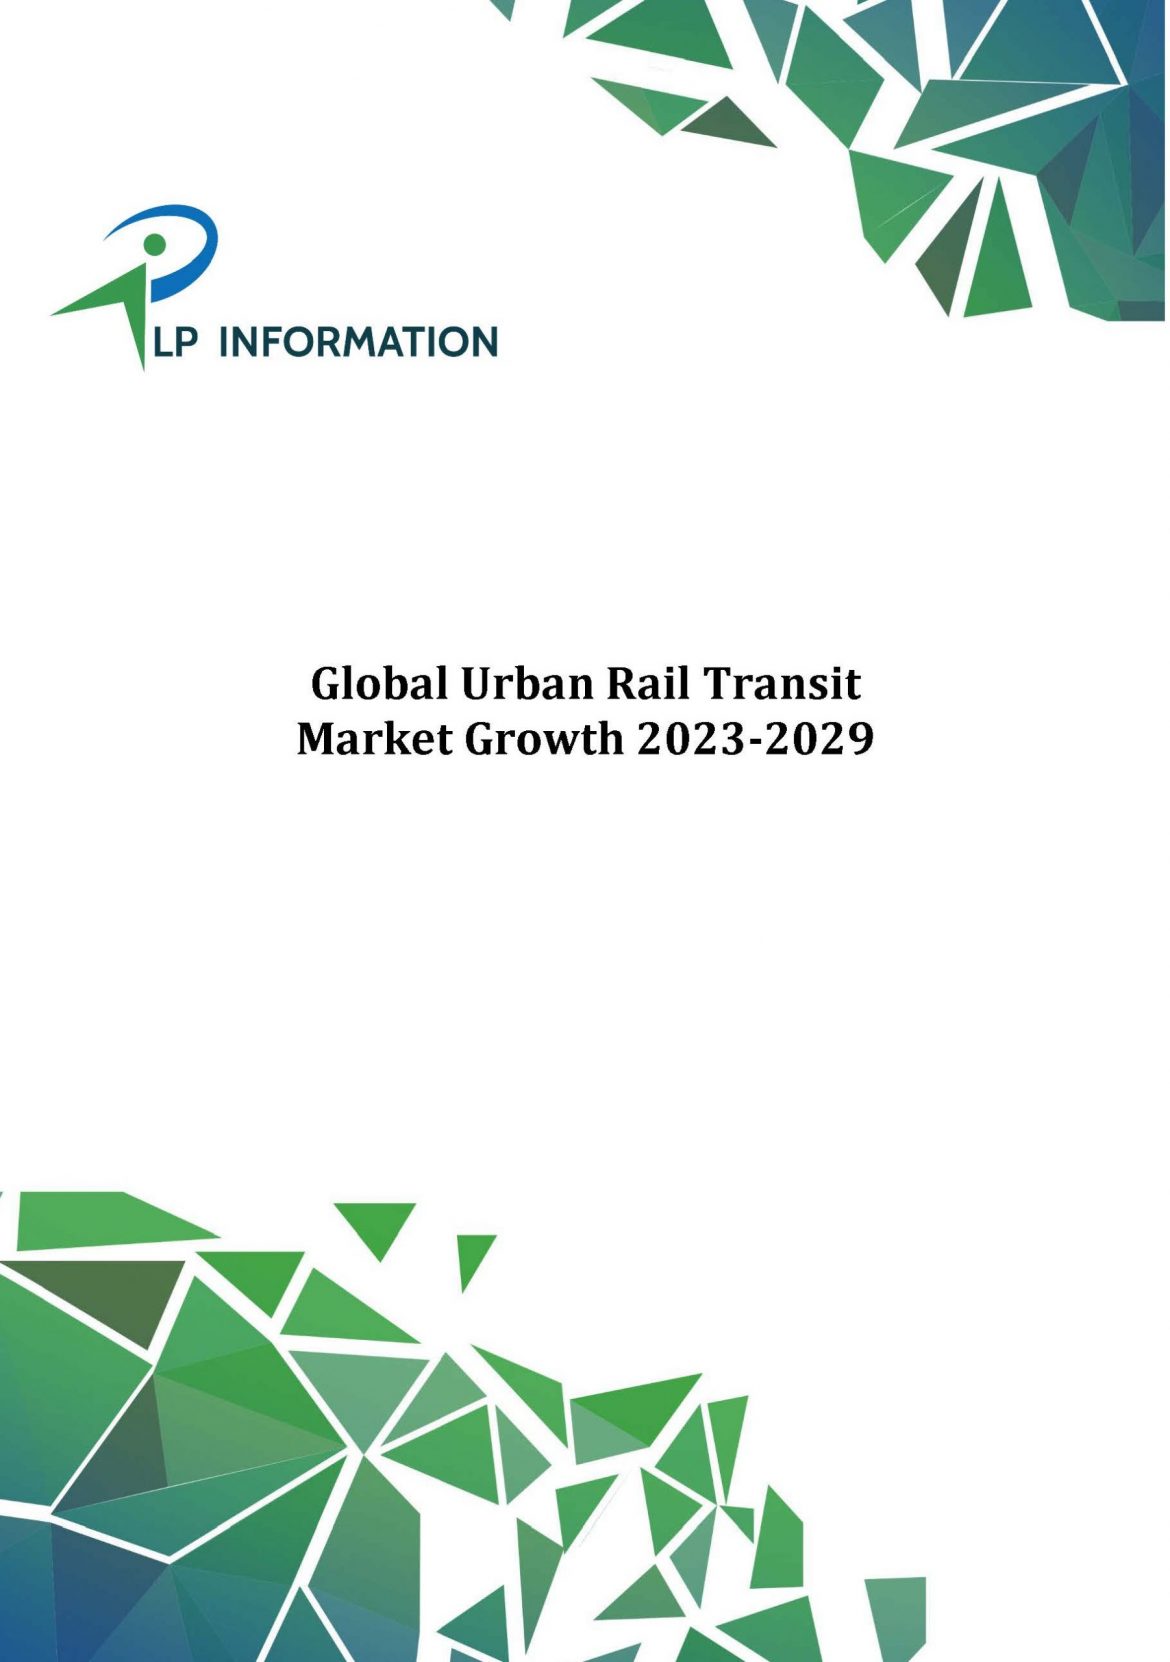 Global Urban Rail Transit Market Growth 2023-2029